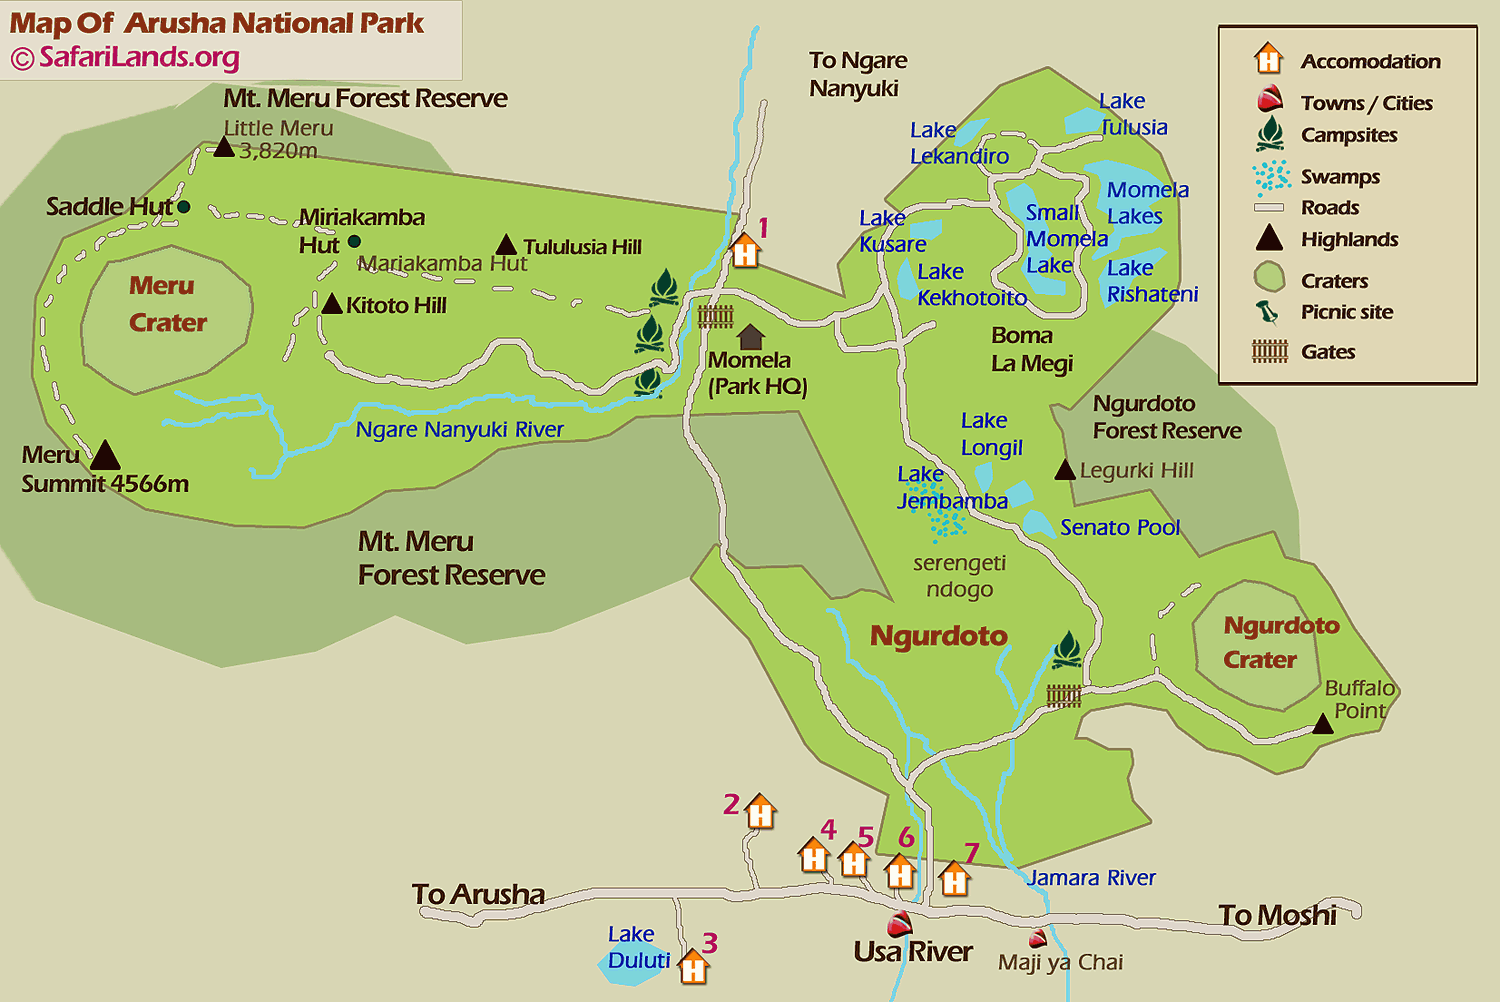 Afrika Safari in Tansania - Arusha Nationalpark